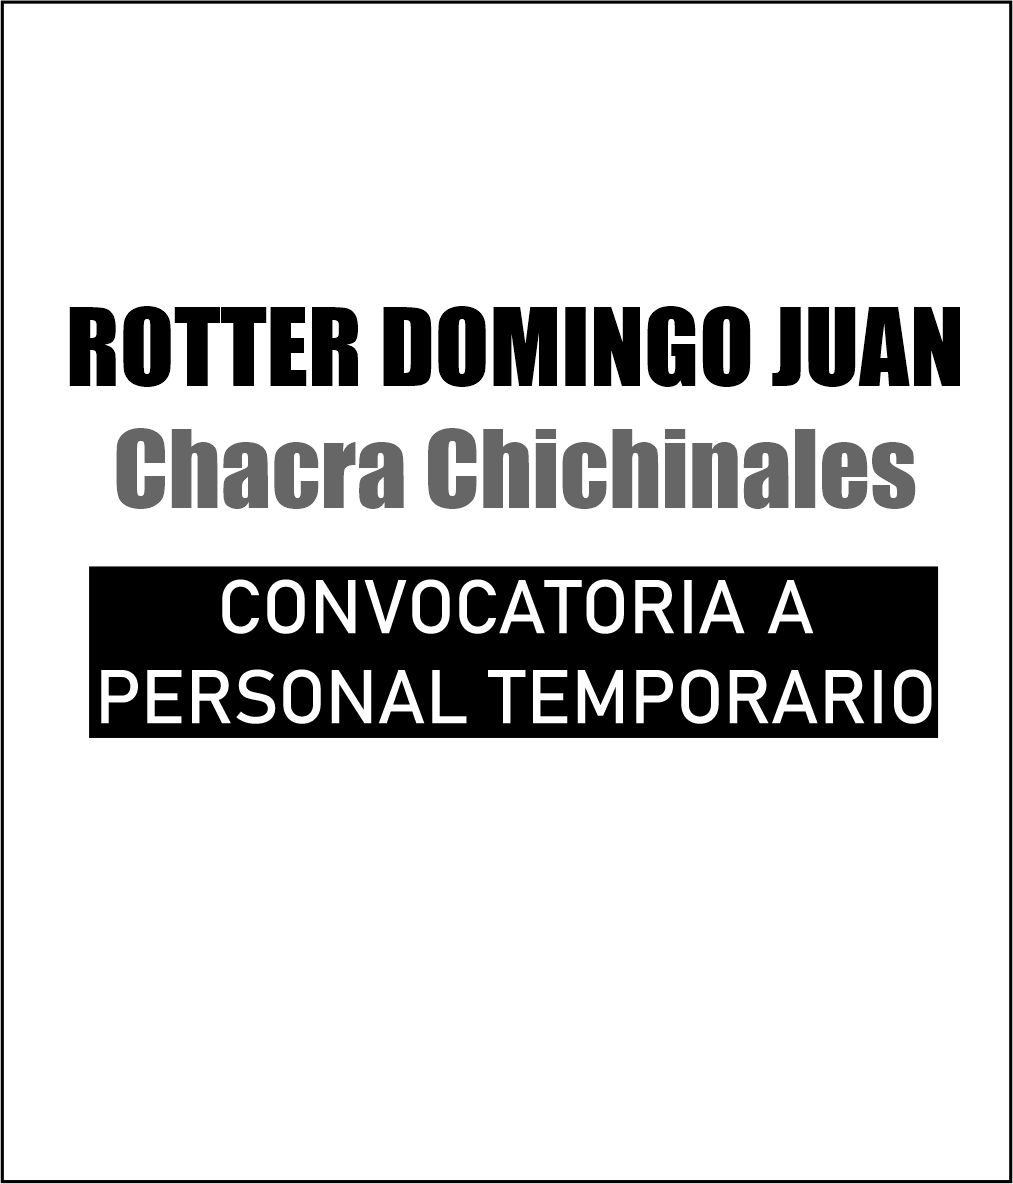 CONVOCATORIA A PERSONAL TEMPORARIO: ROTTER DOMINGO JUAN